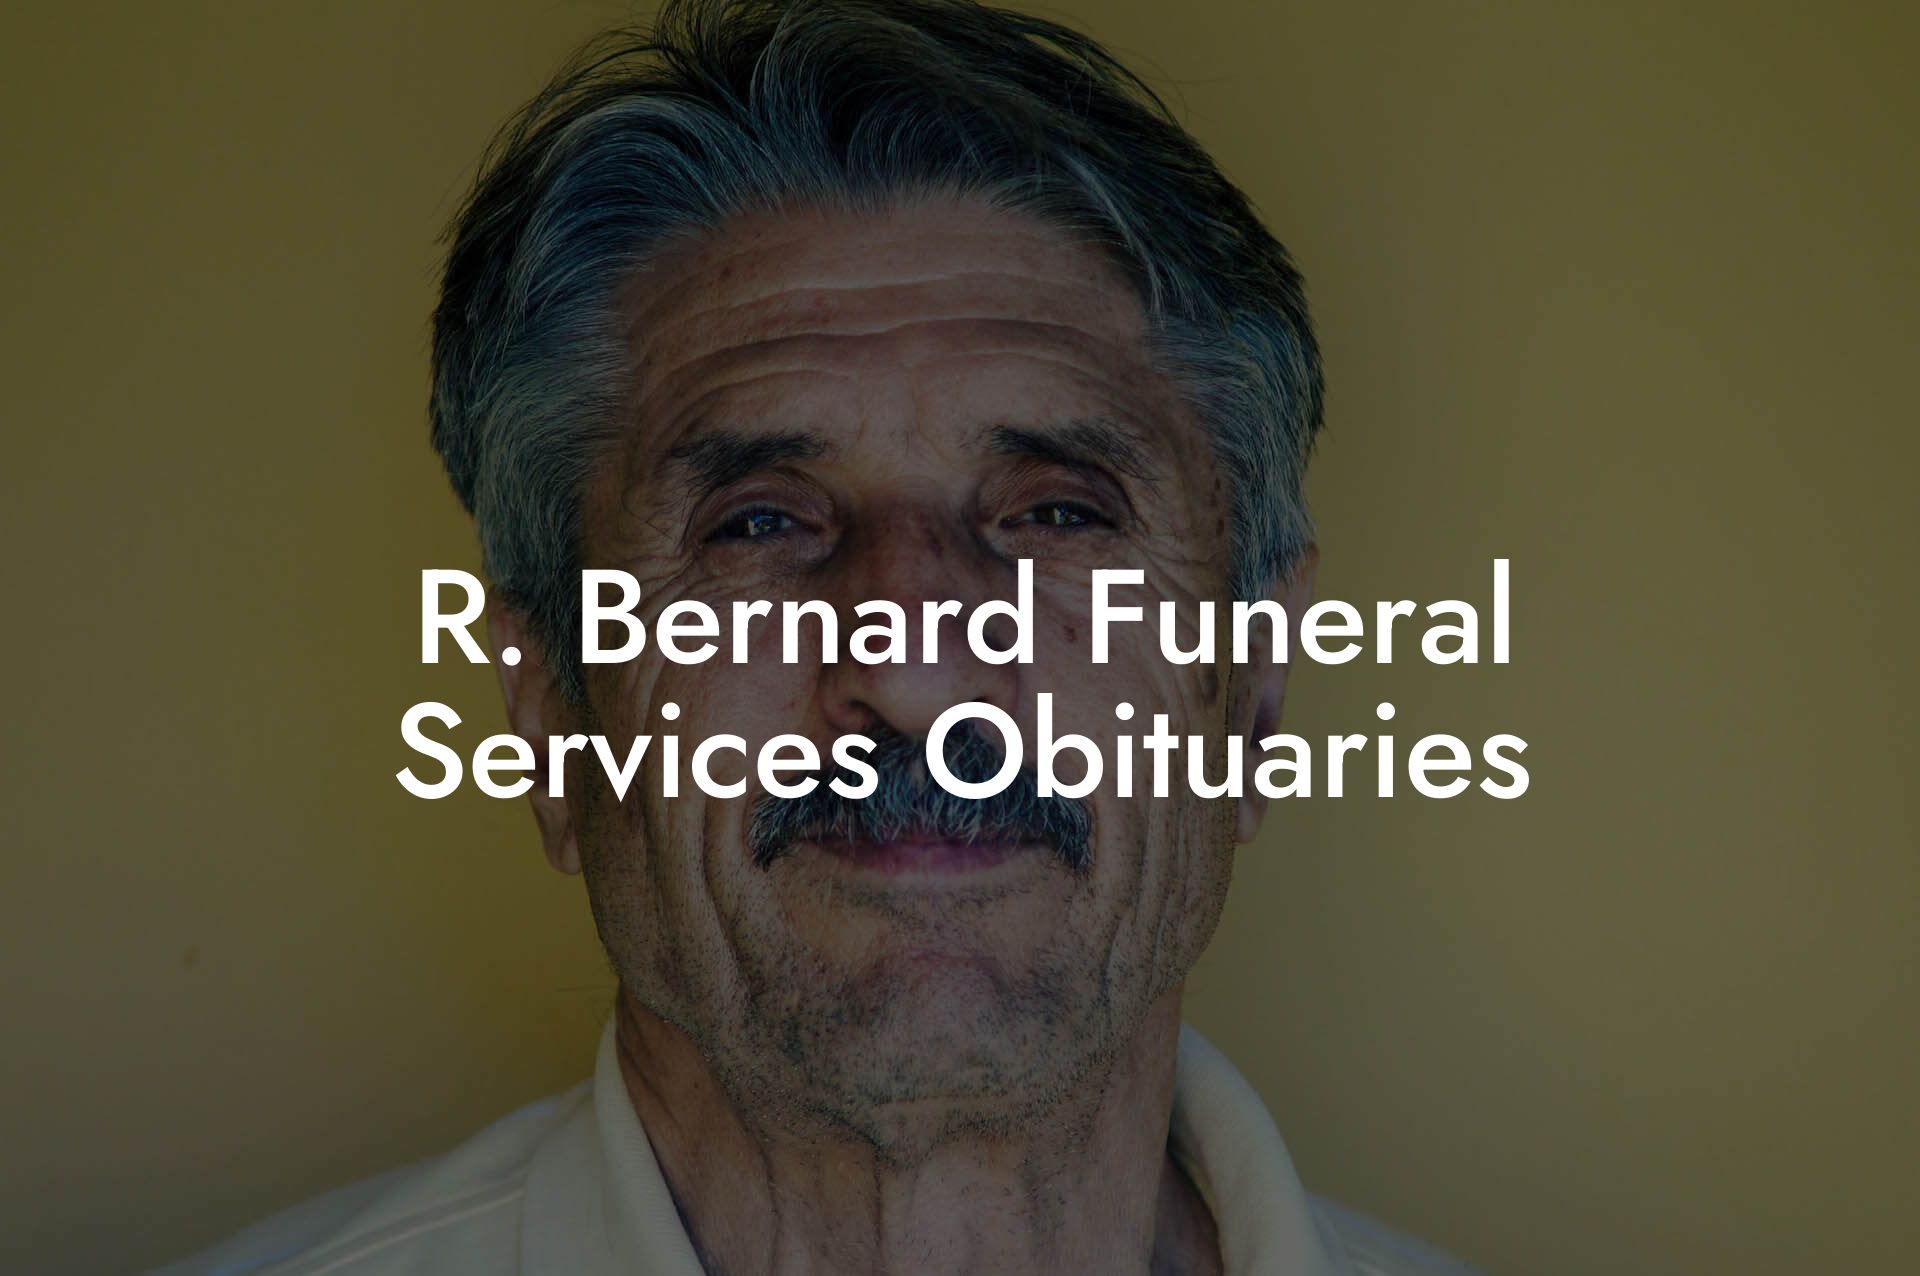 R. Bernard Funeral Services Obituaries